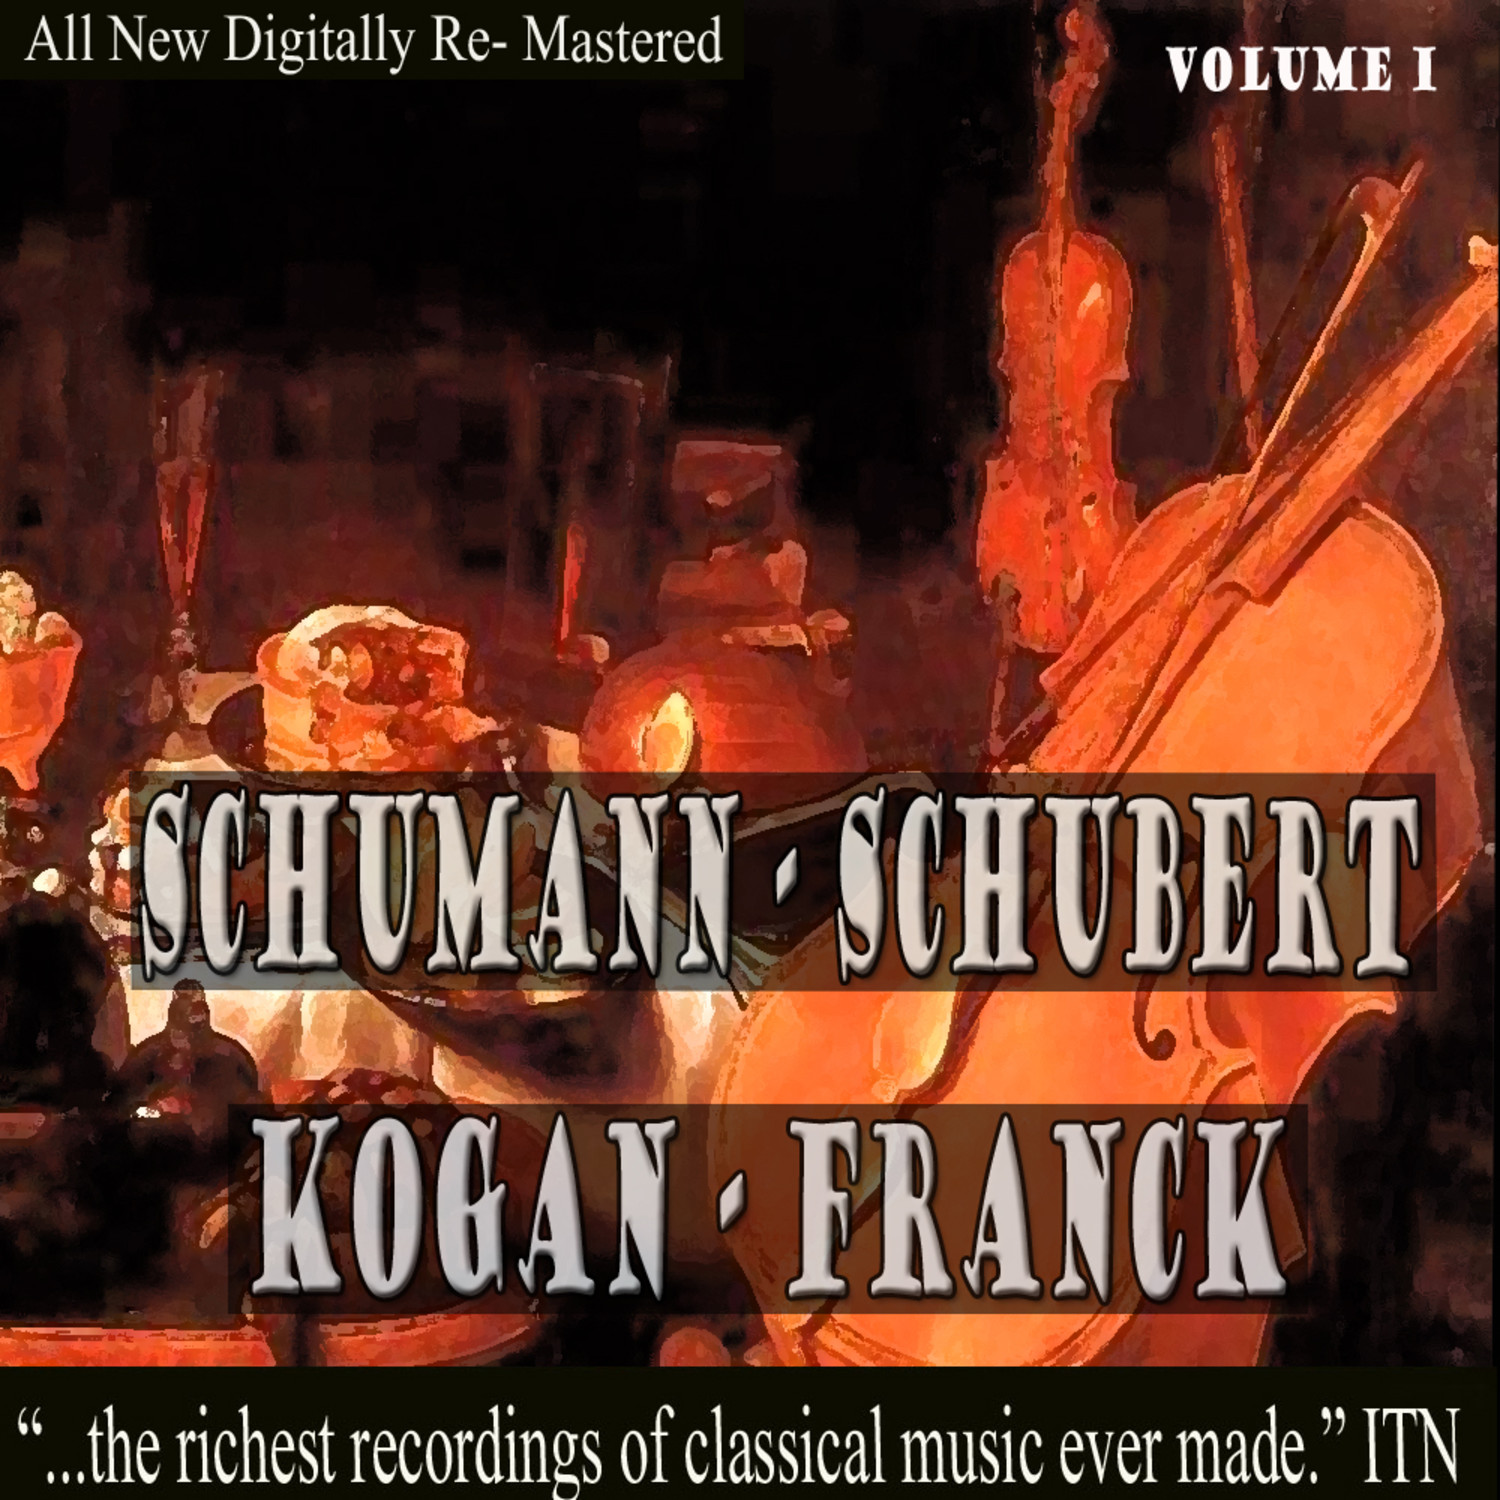 Schumann - Schubert: Kogan, Franck Volume 1